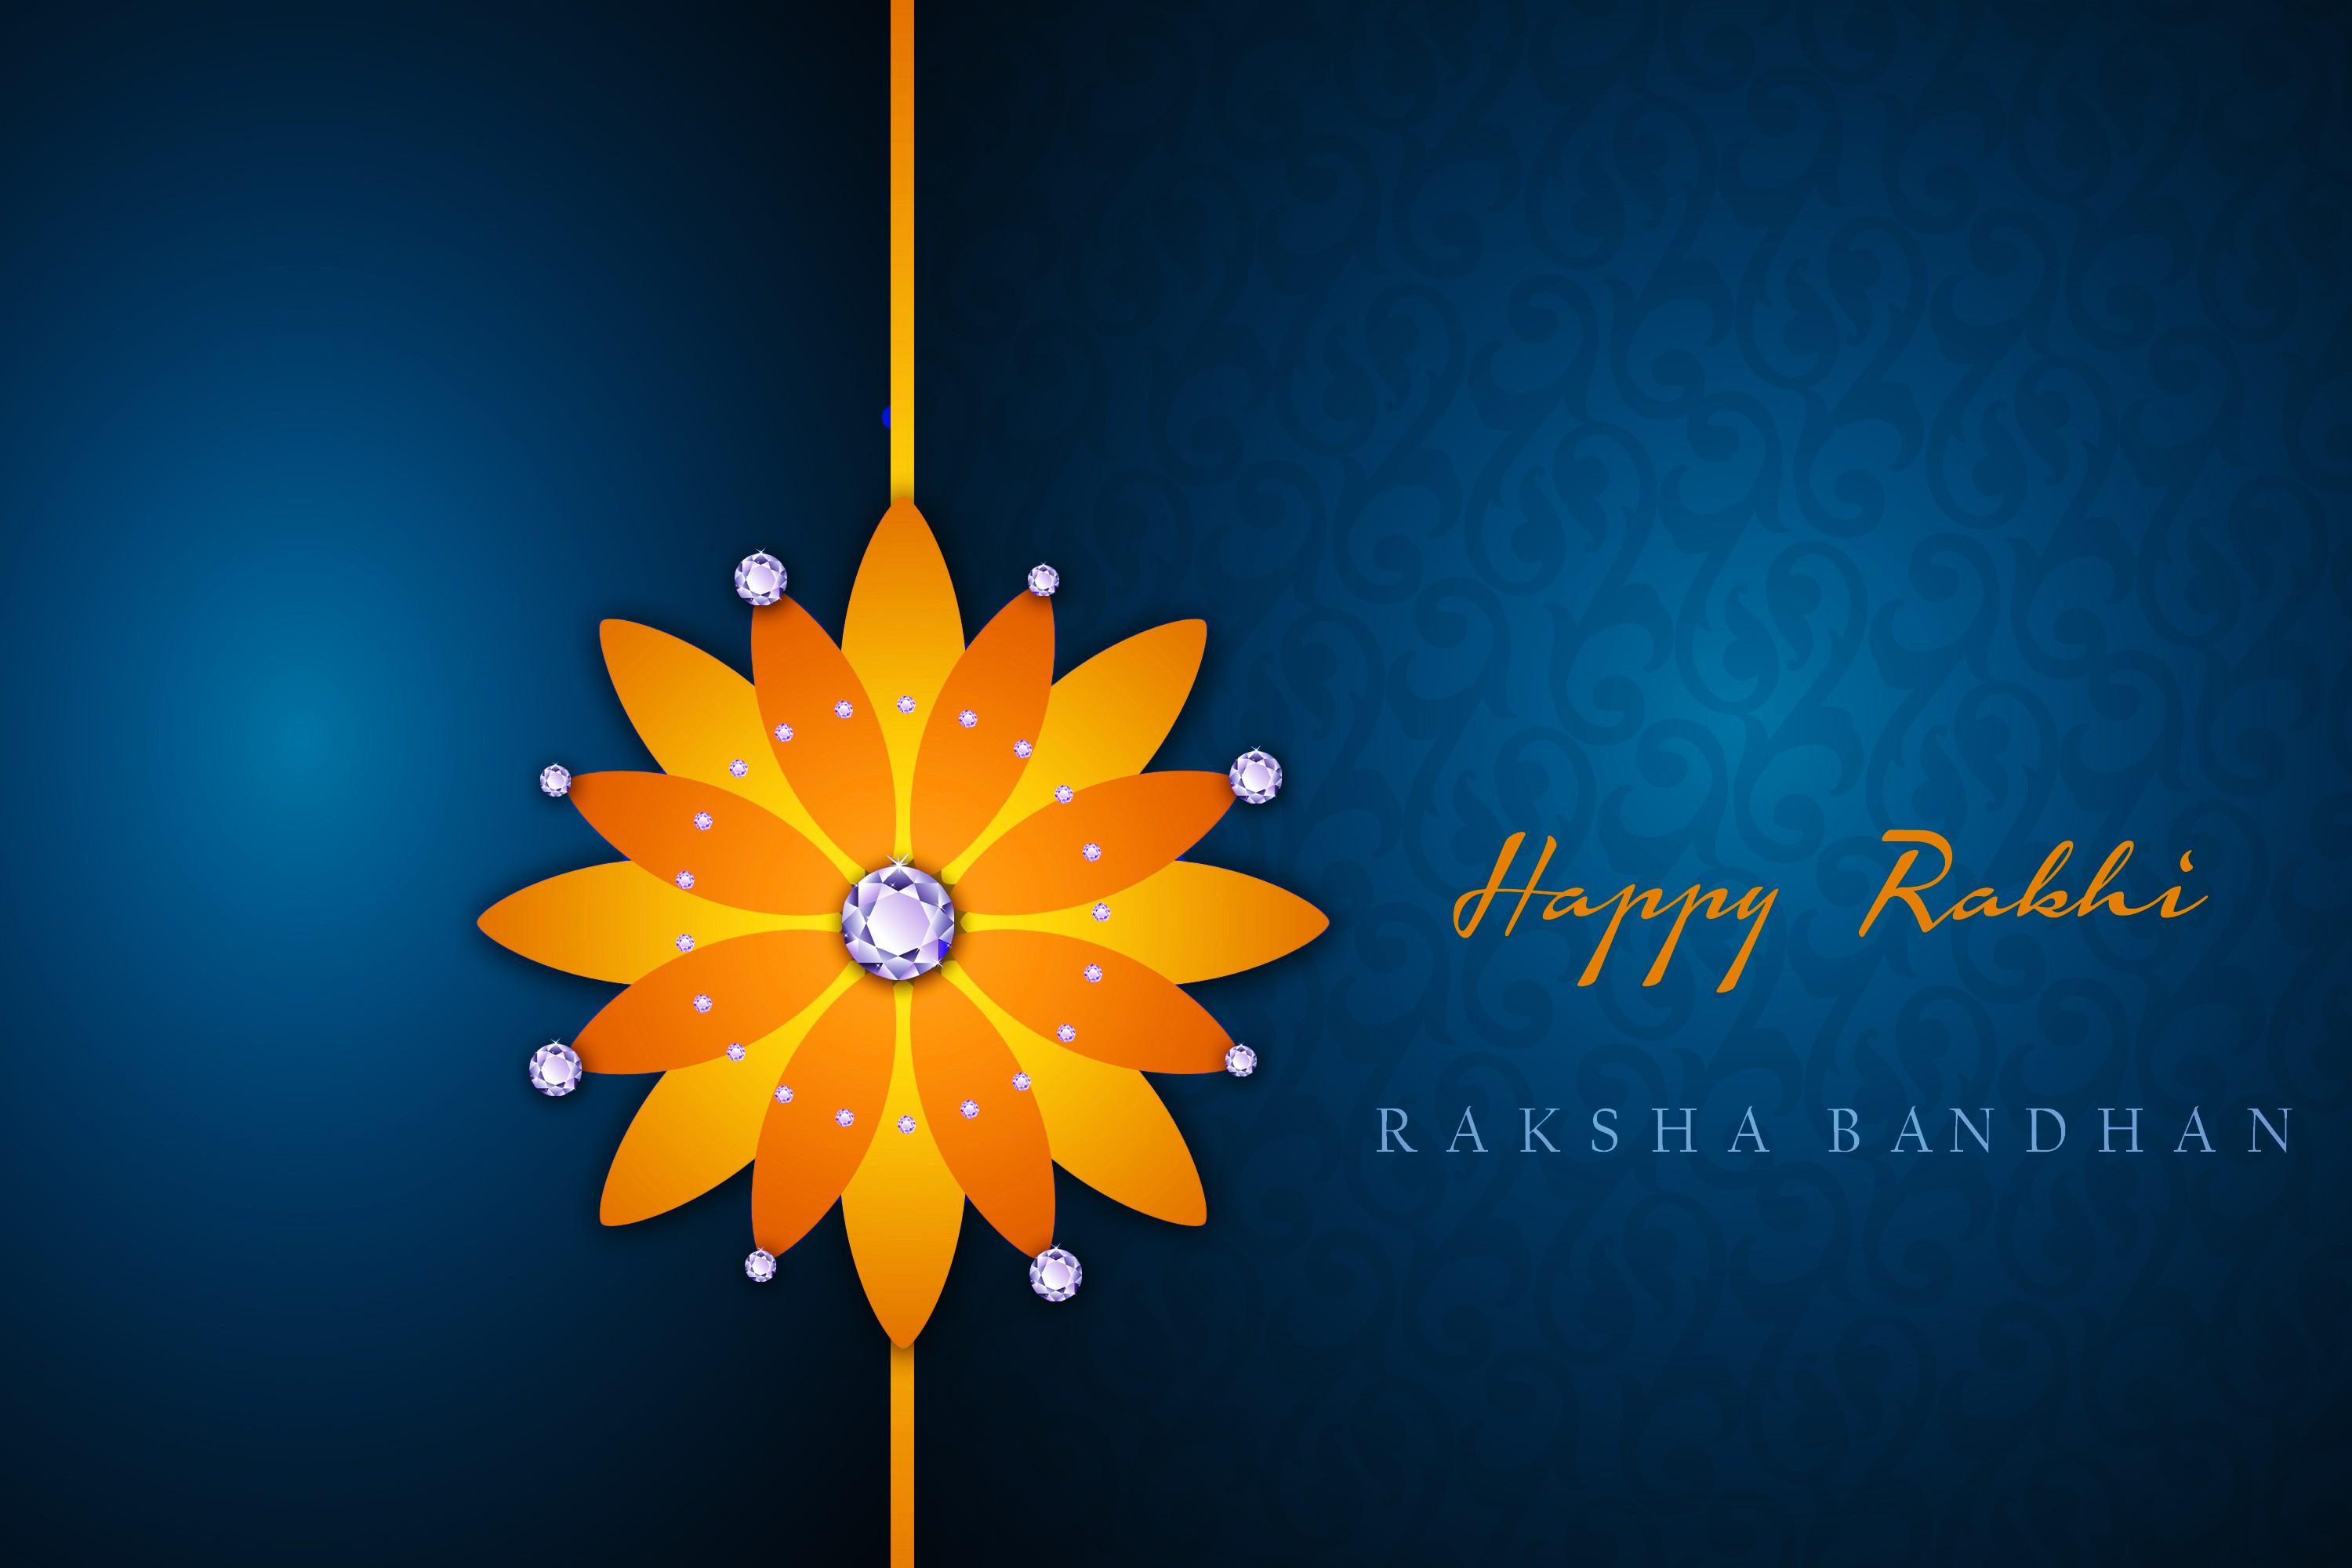 Happy Raksha Bandhan new wishes editing wallpaper HD free